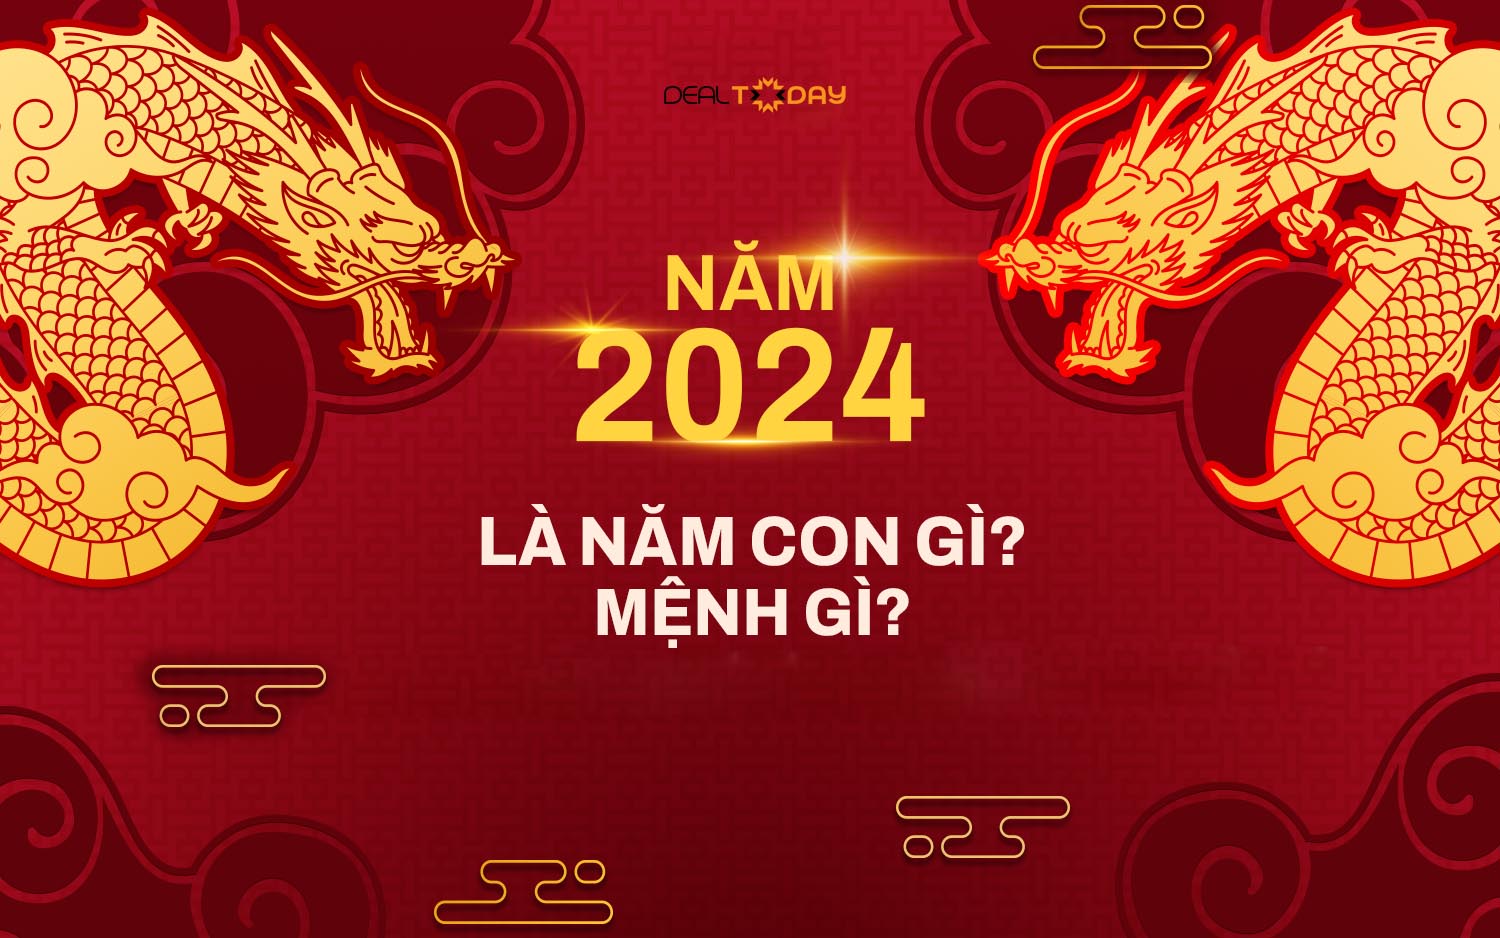 sinh-nam-2024-menh-gi